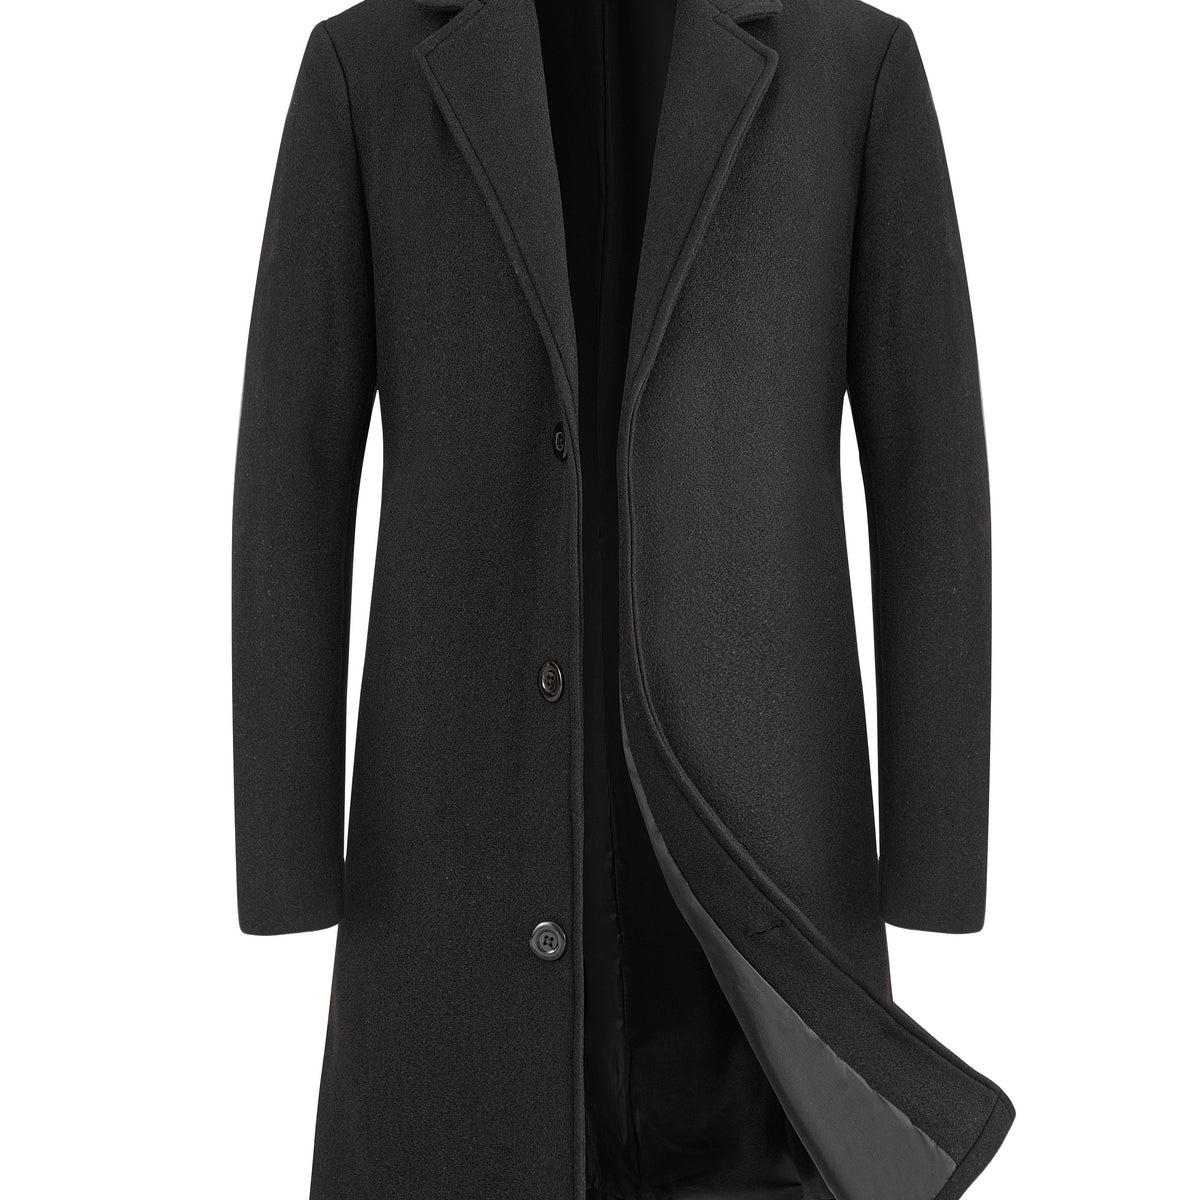 gbolsos  Classic Design Warm Coat, Men's Semi-formal Mid Length Button Up Lapel Coat For Fall Winter Business